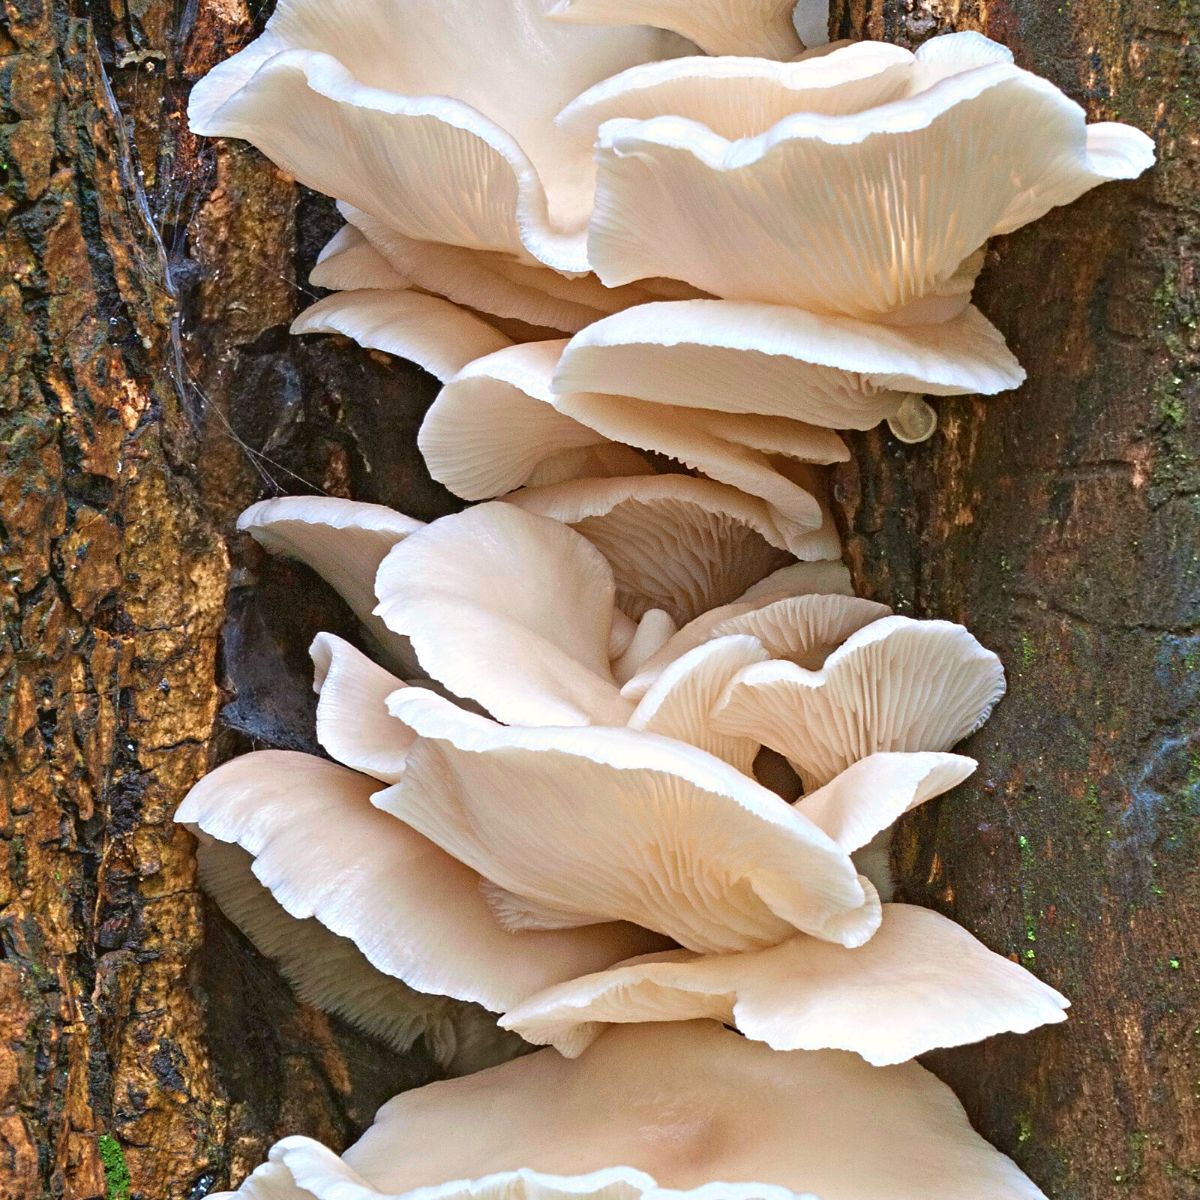 Phoenix oyster mushrooms